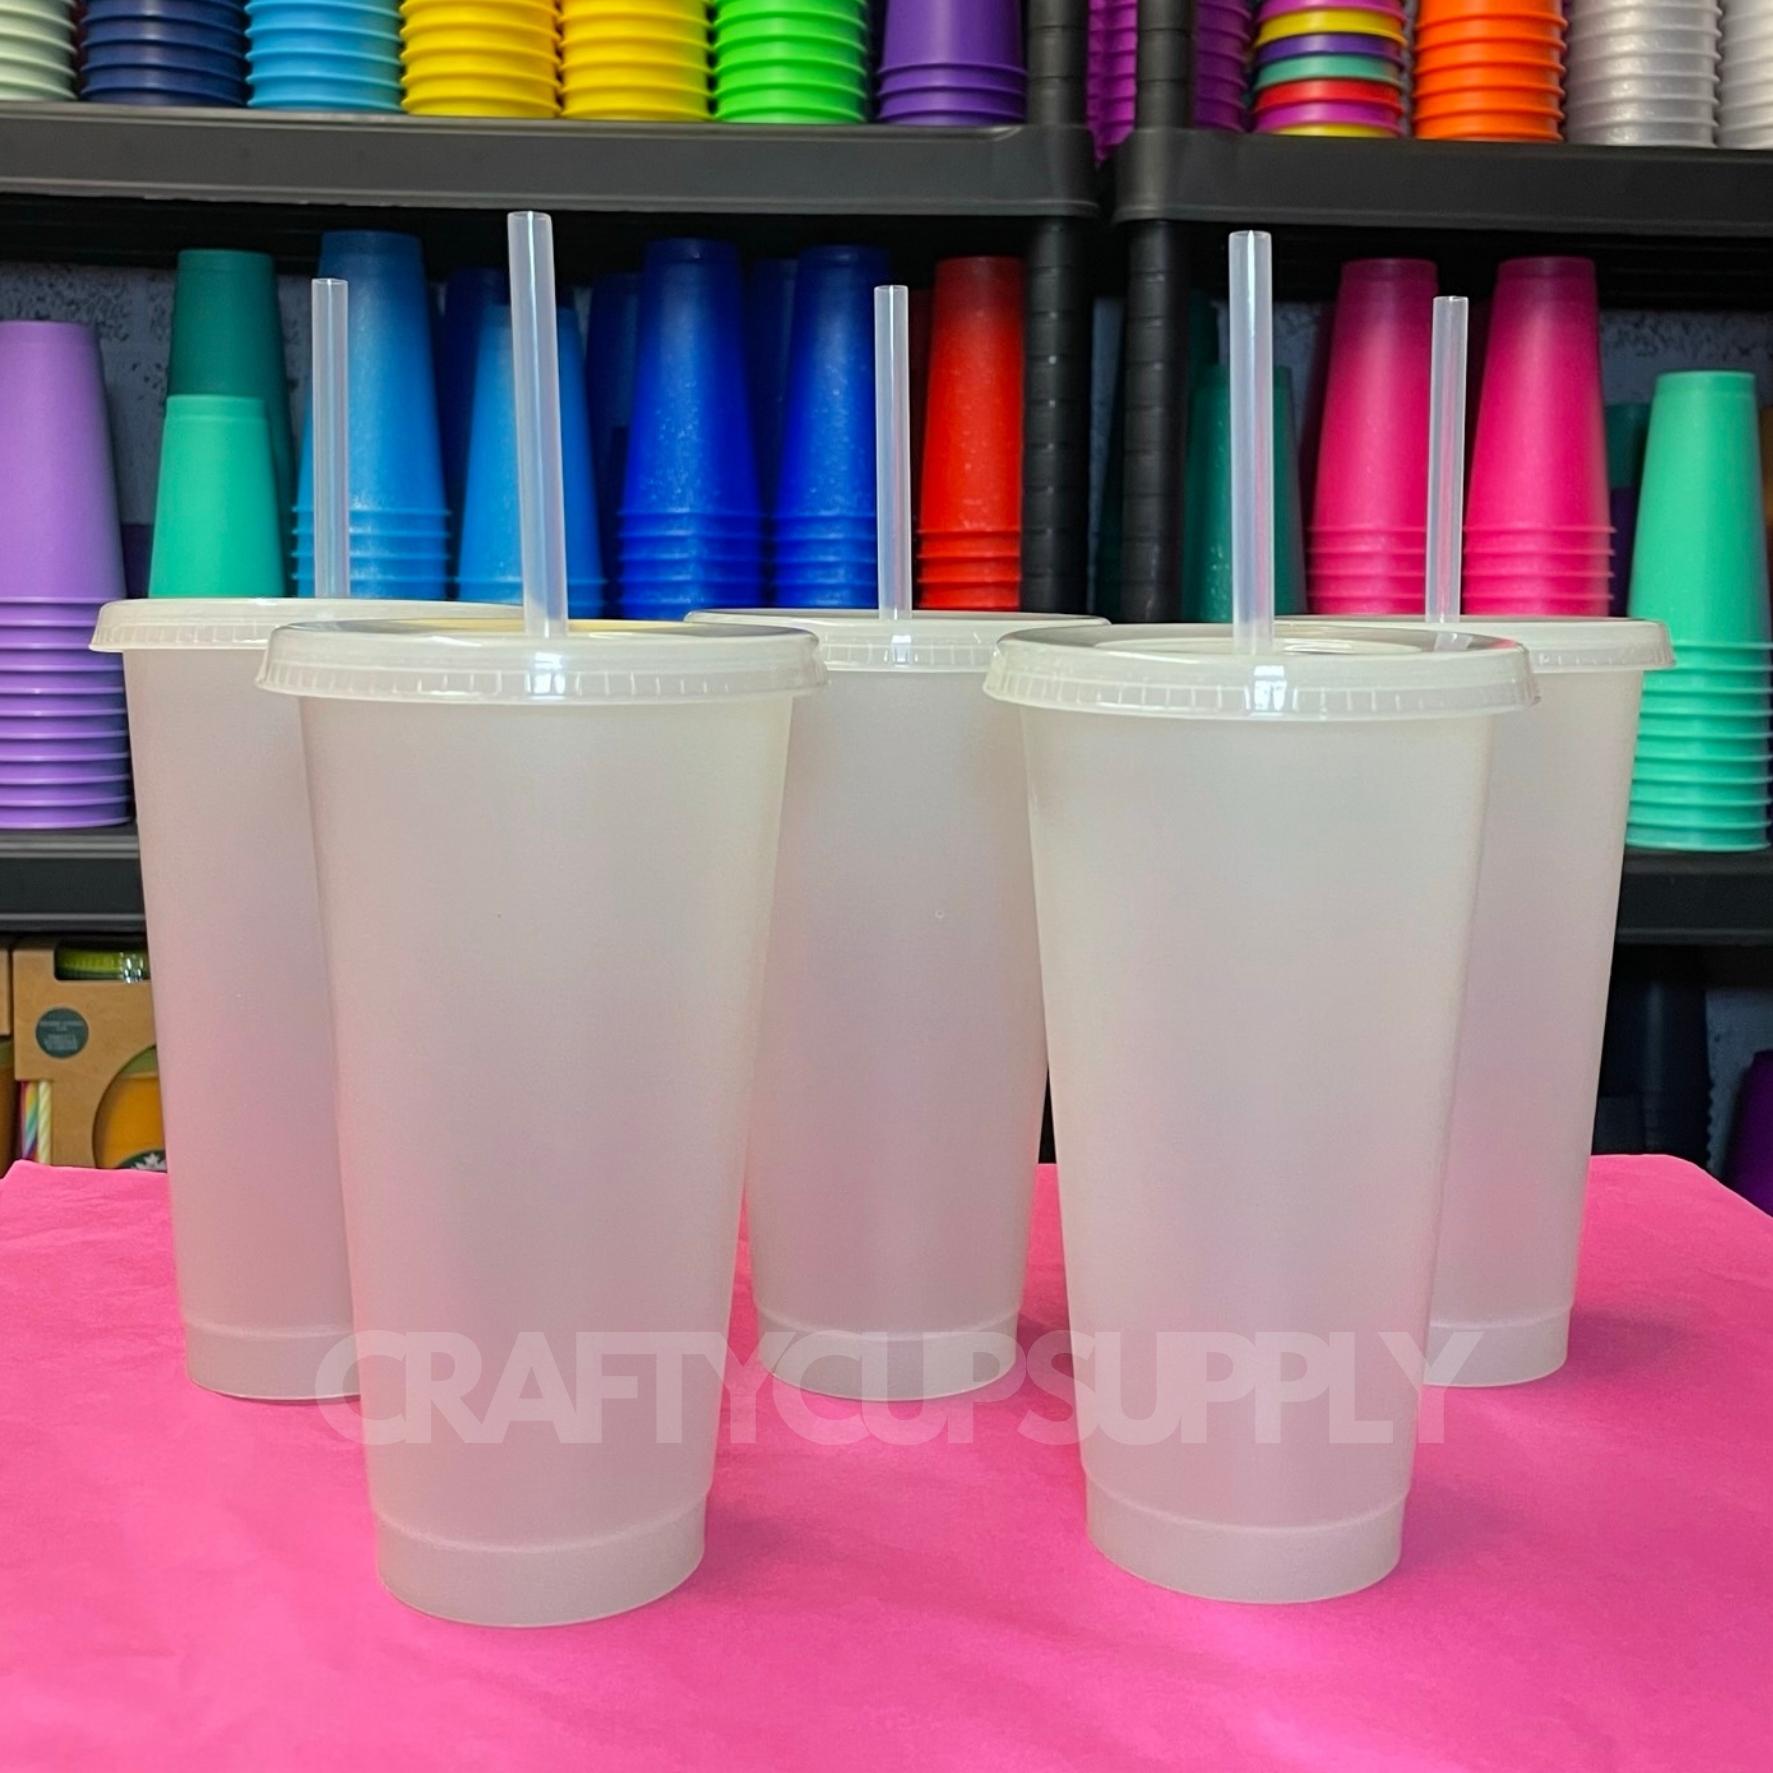 cups for teckwrap vinyl